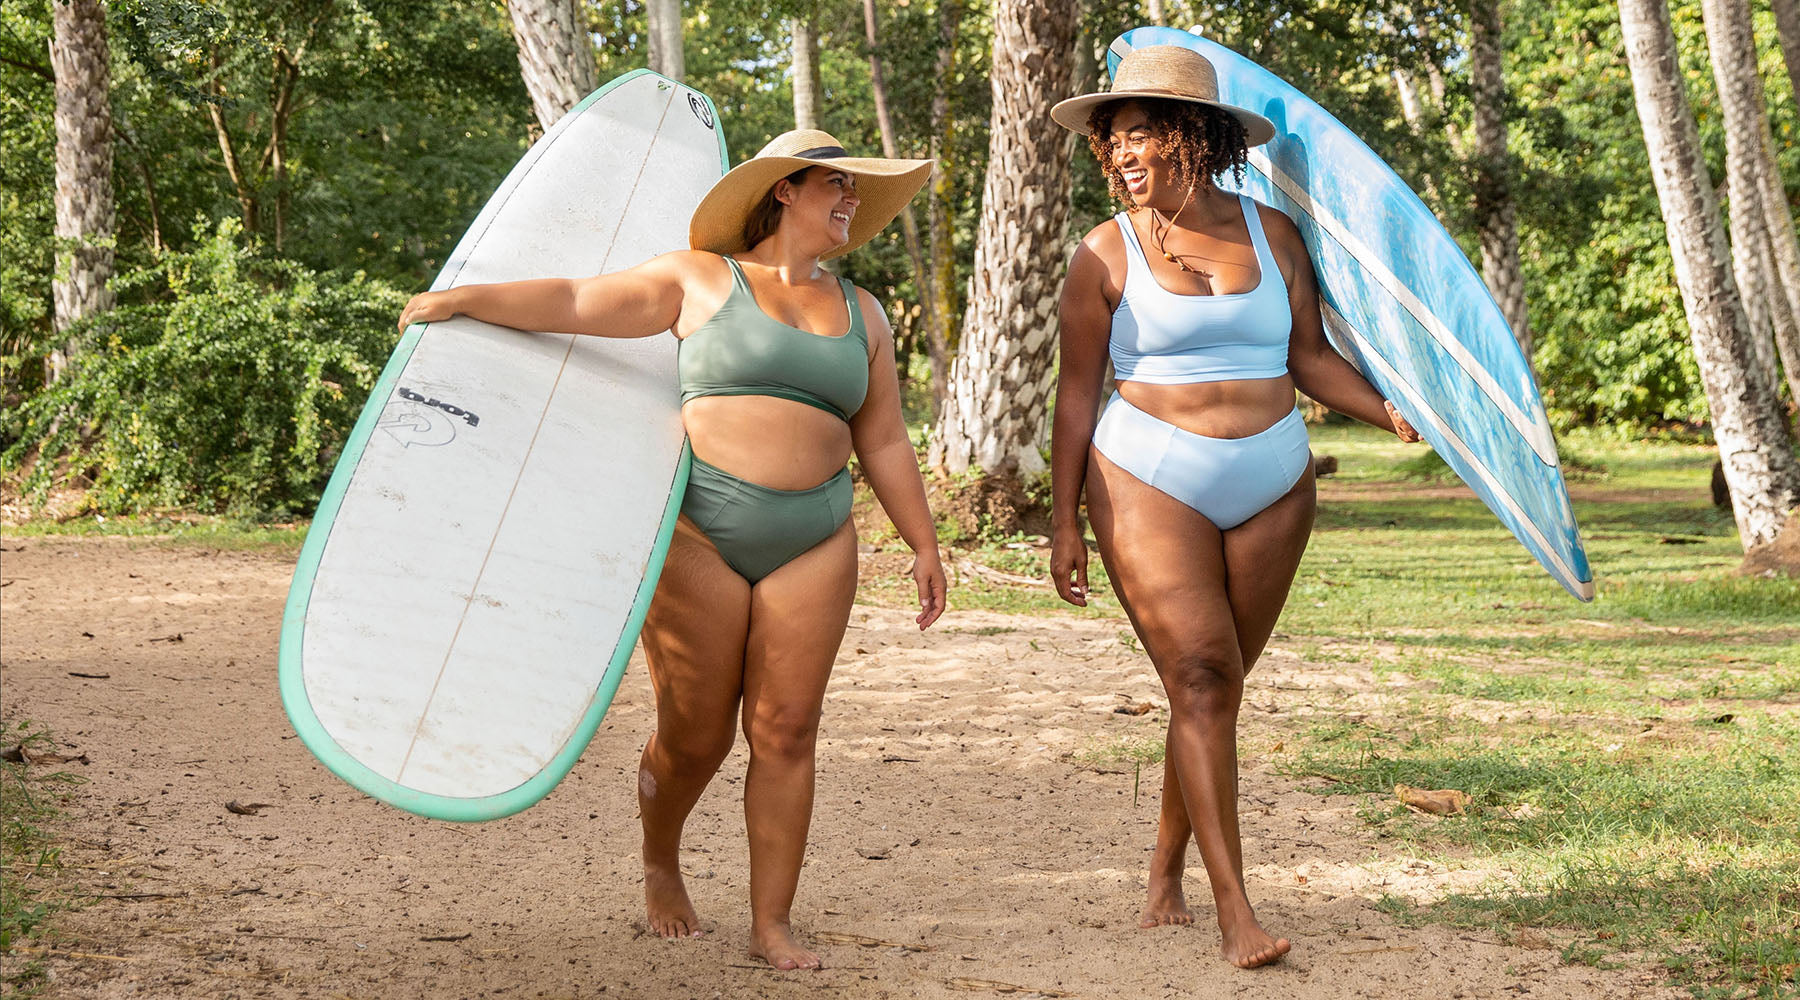 2 women walking on a path carrying surf boards in bikinis